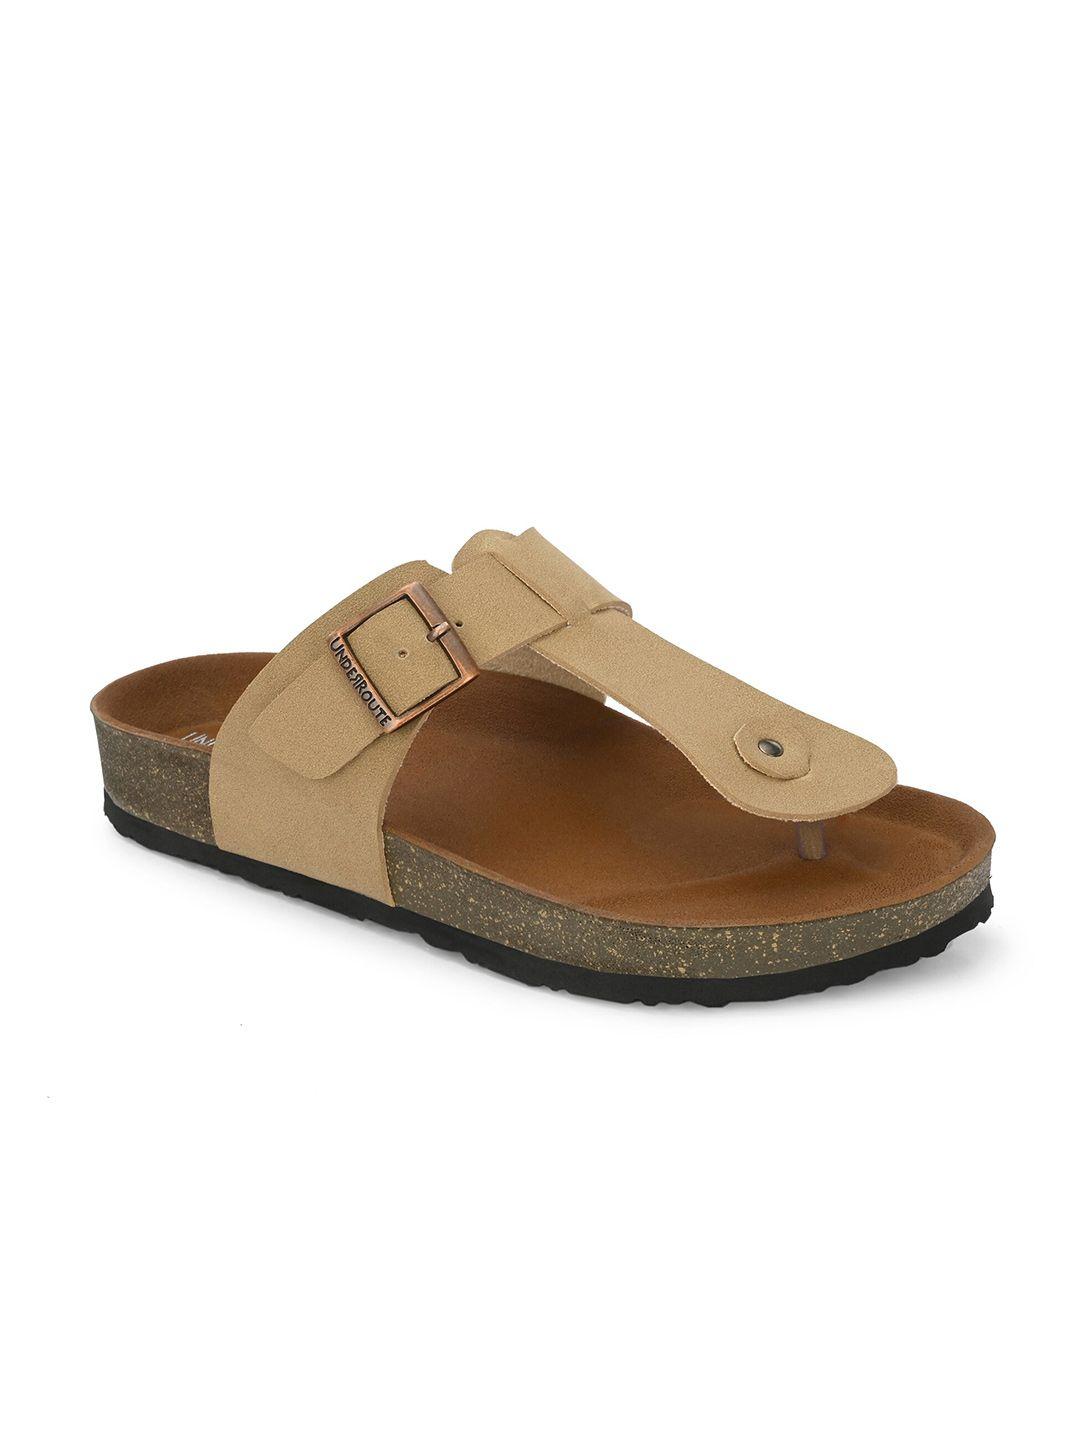 underroute men one-toe comfort sandals